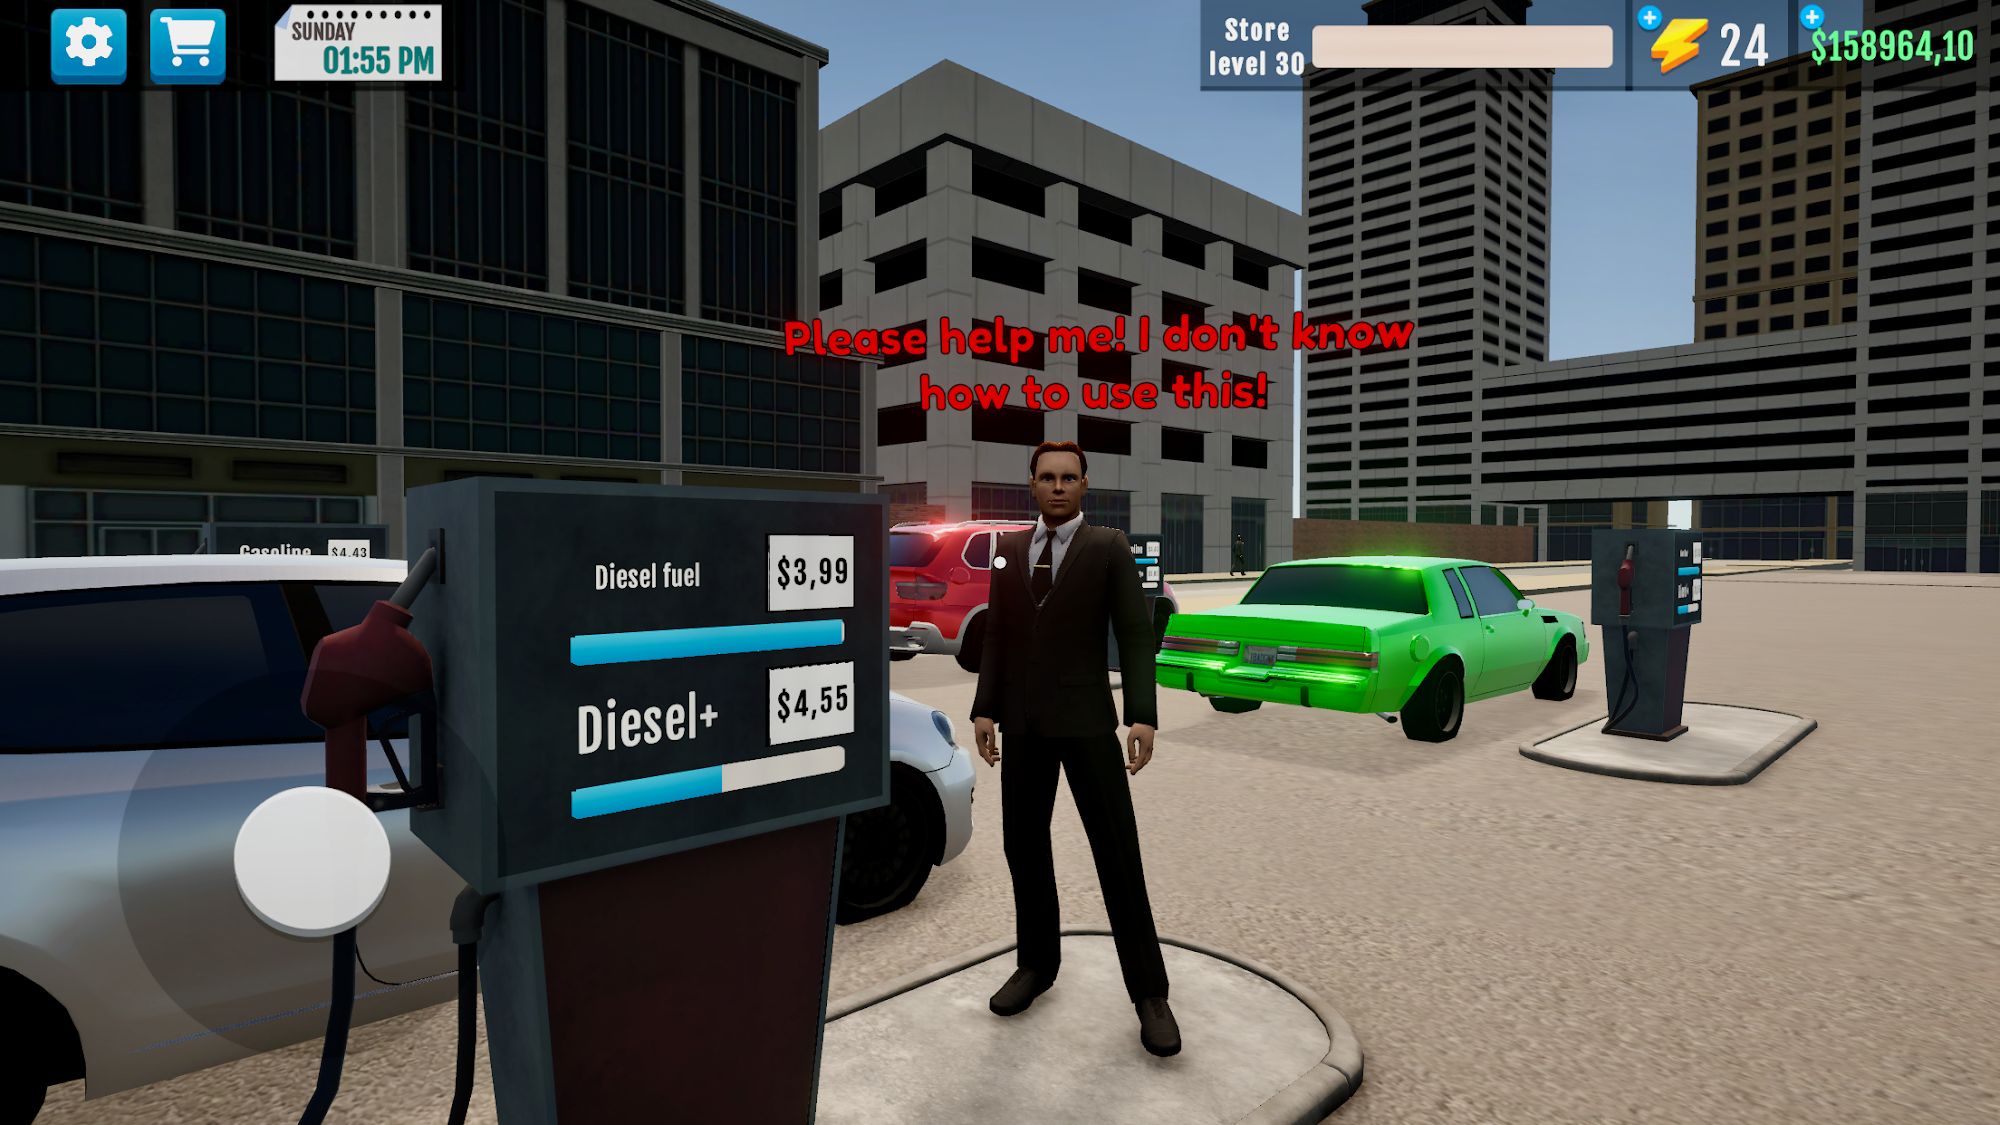 Download City Gas Station Simulator 3D für Android A.n.d.r.o.i.d. .5...0. .a.n.d. .m.o.r.e kostenlos.